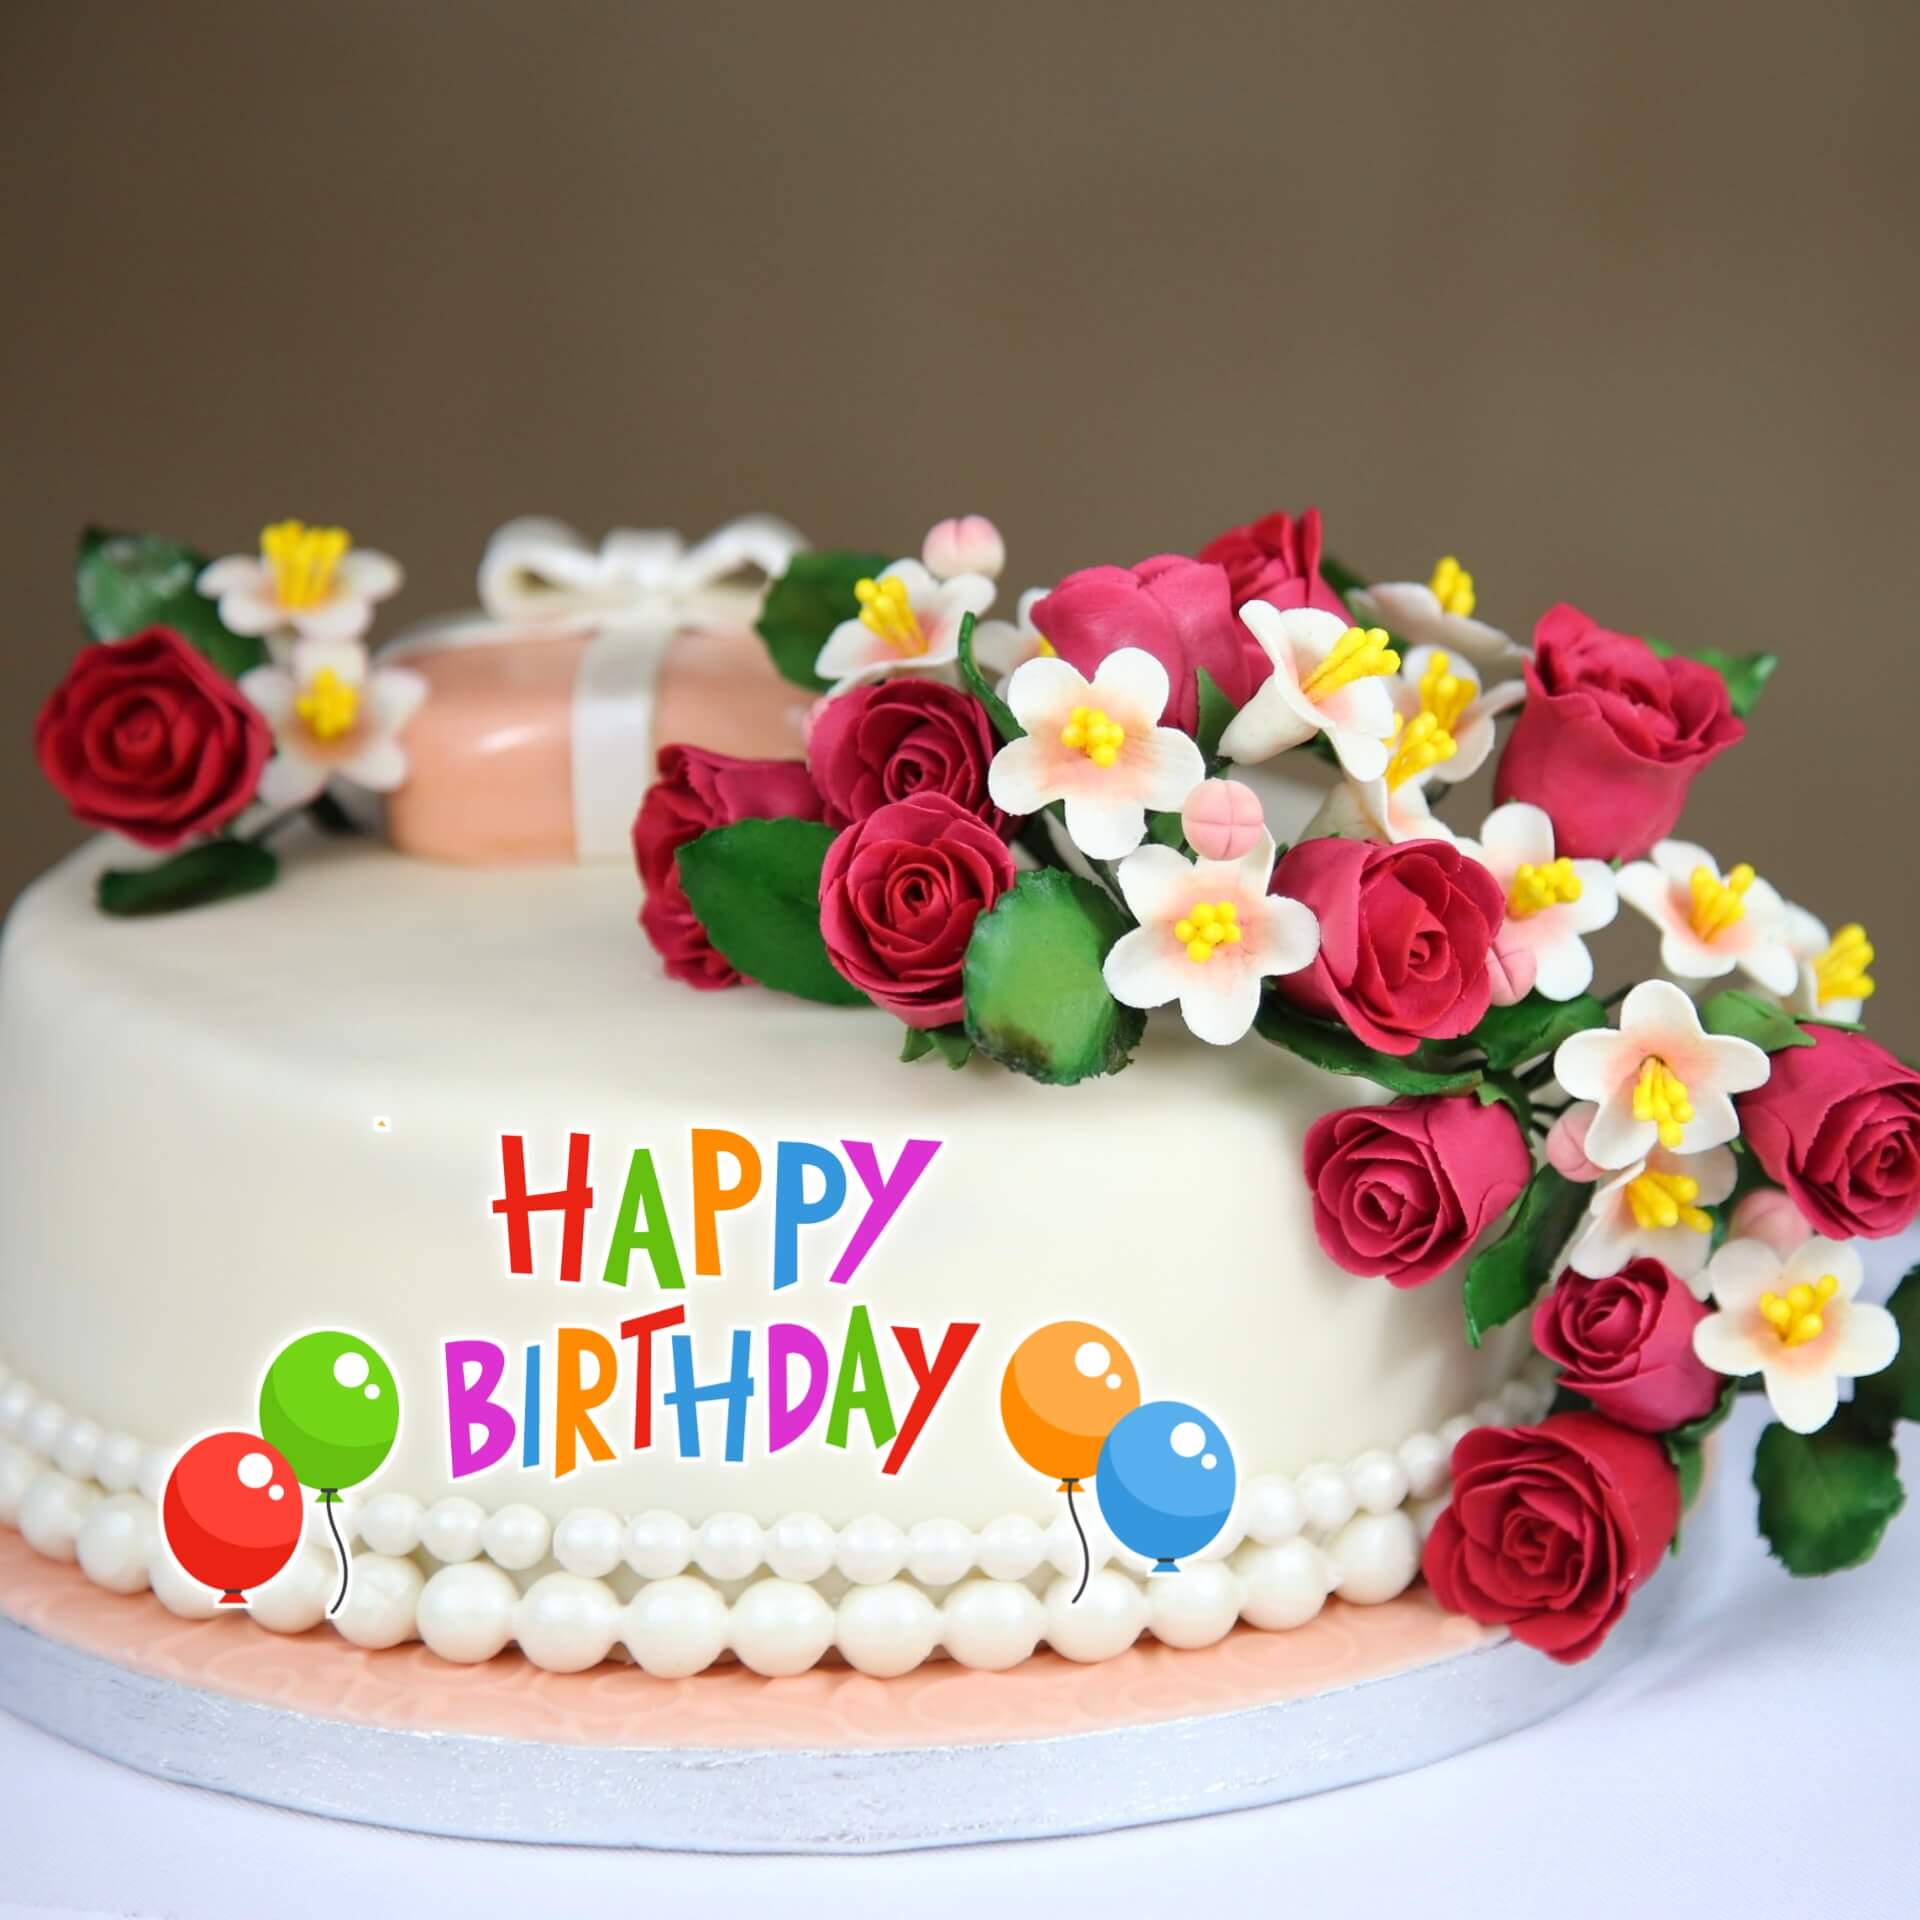 Beautiful Cake Happy Birthday Images